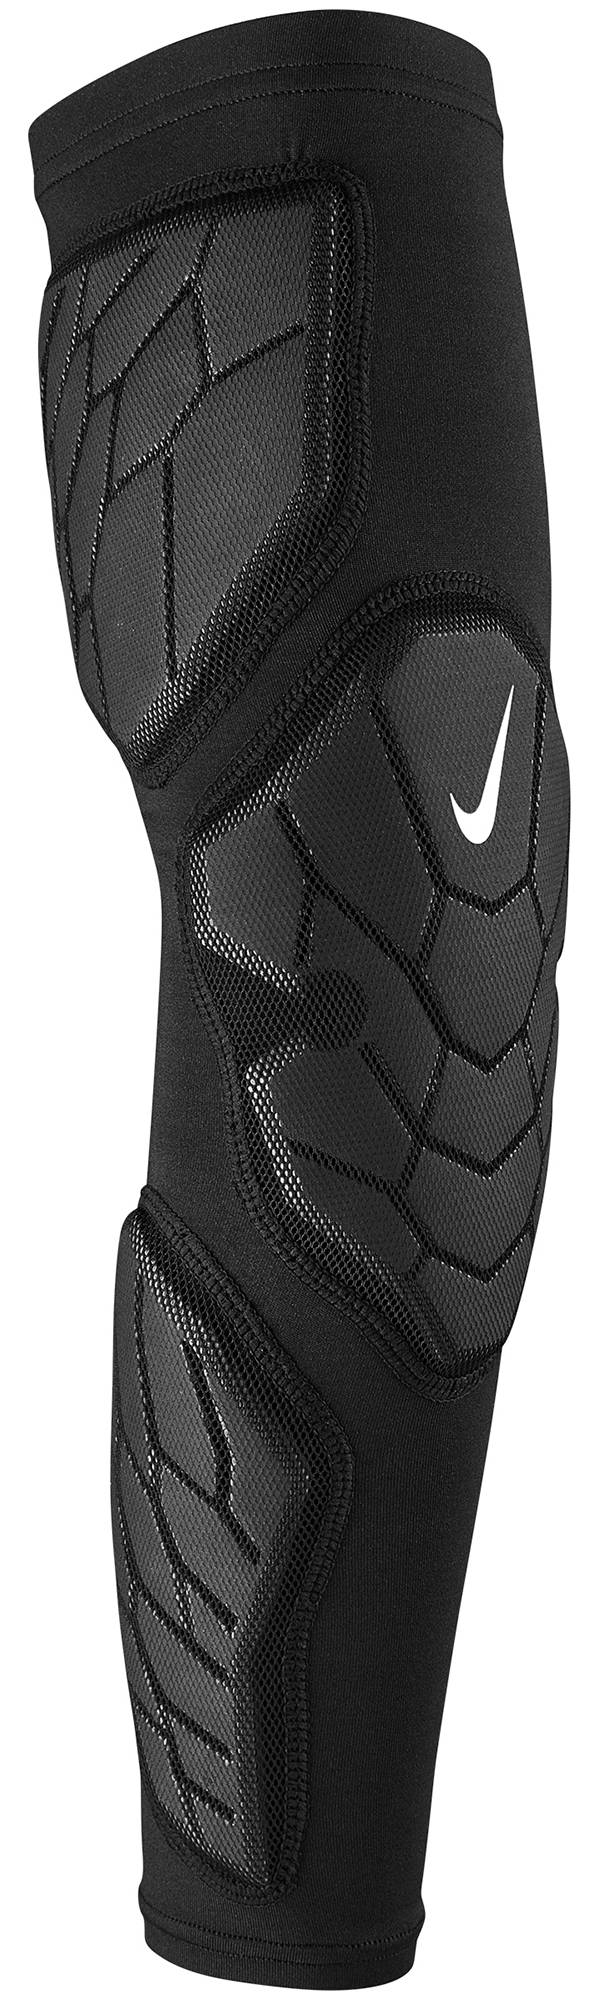 Nike Compression Football Forearm Sleeve, Black, Large